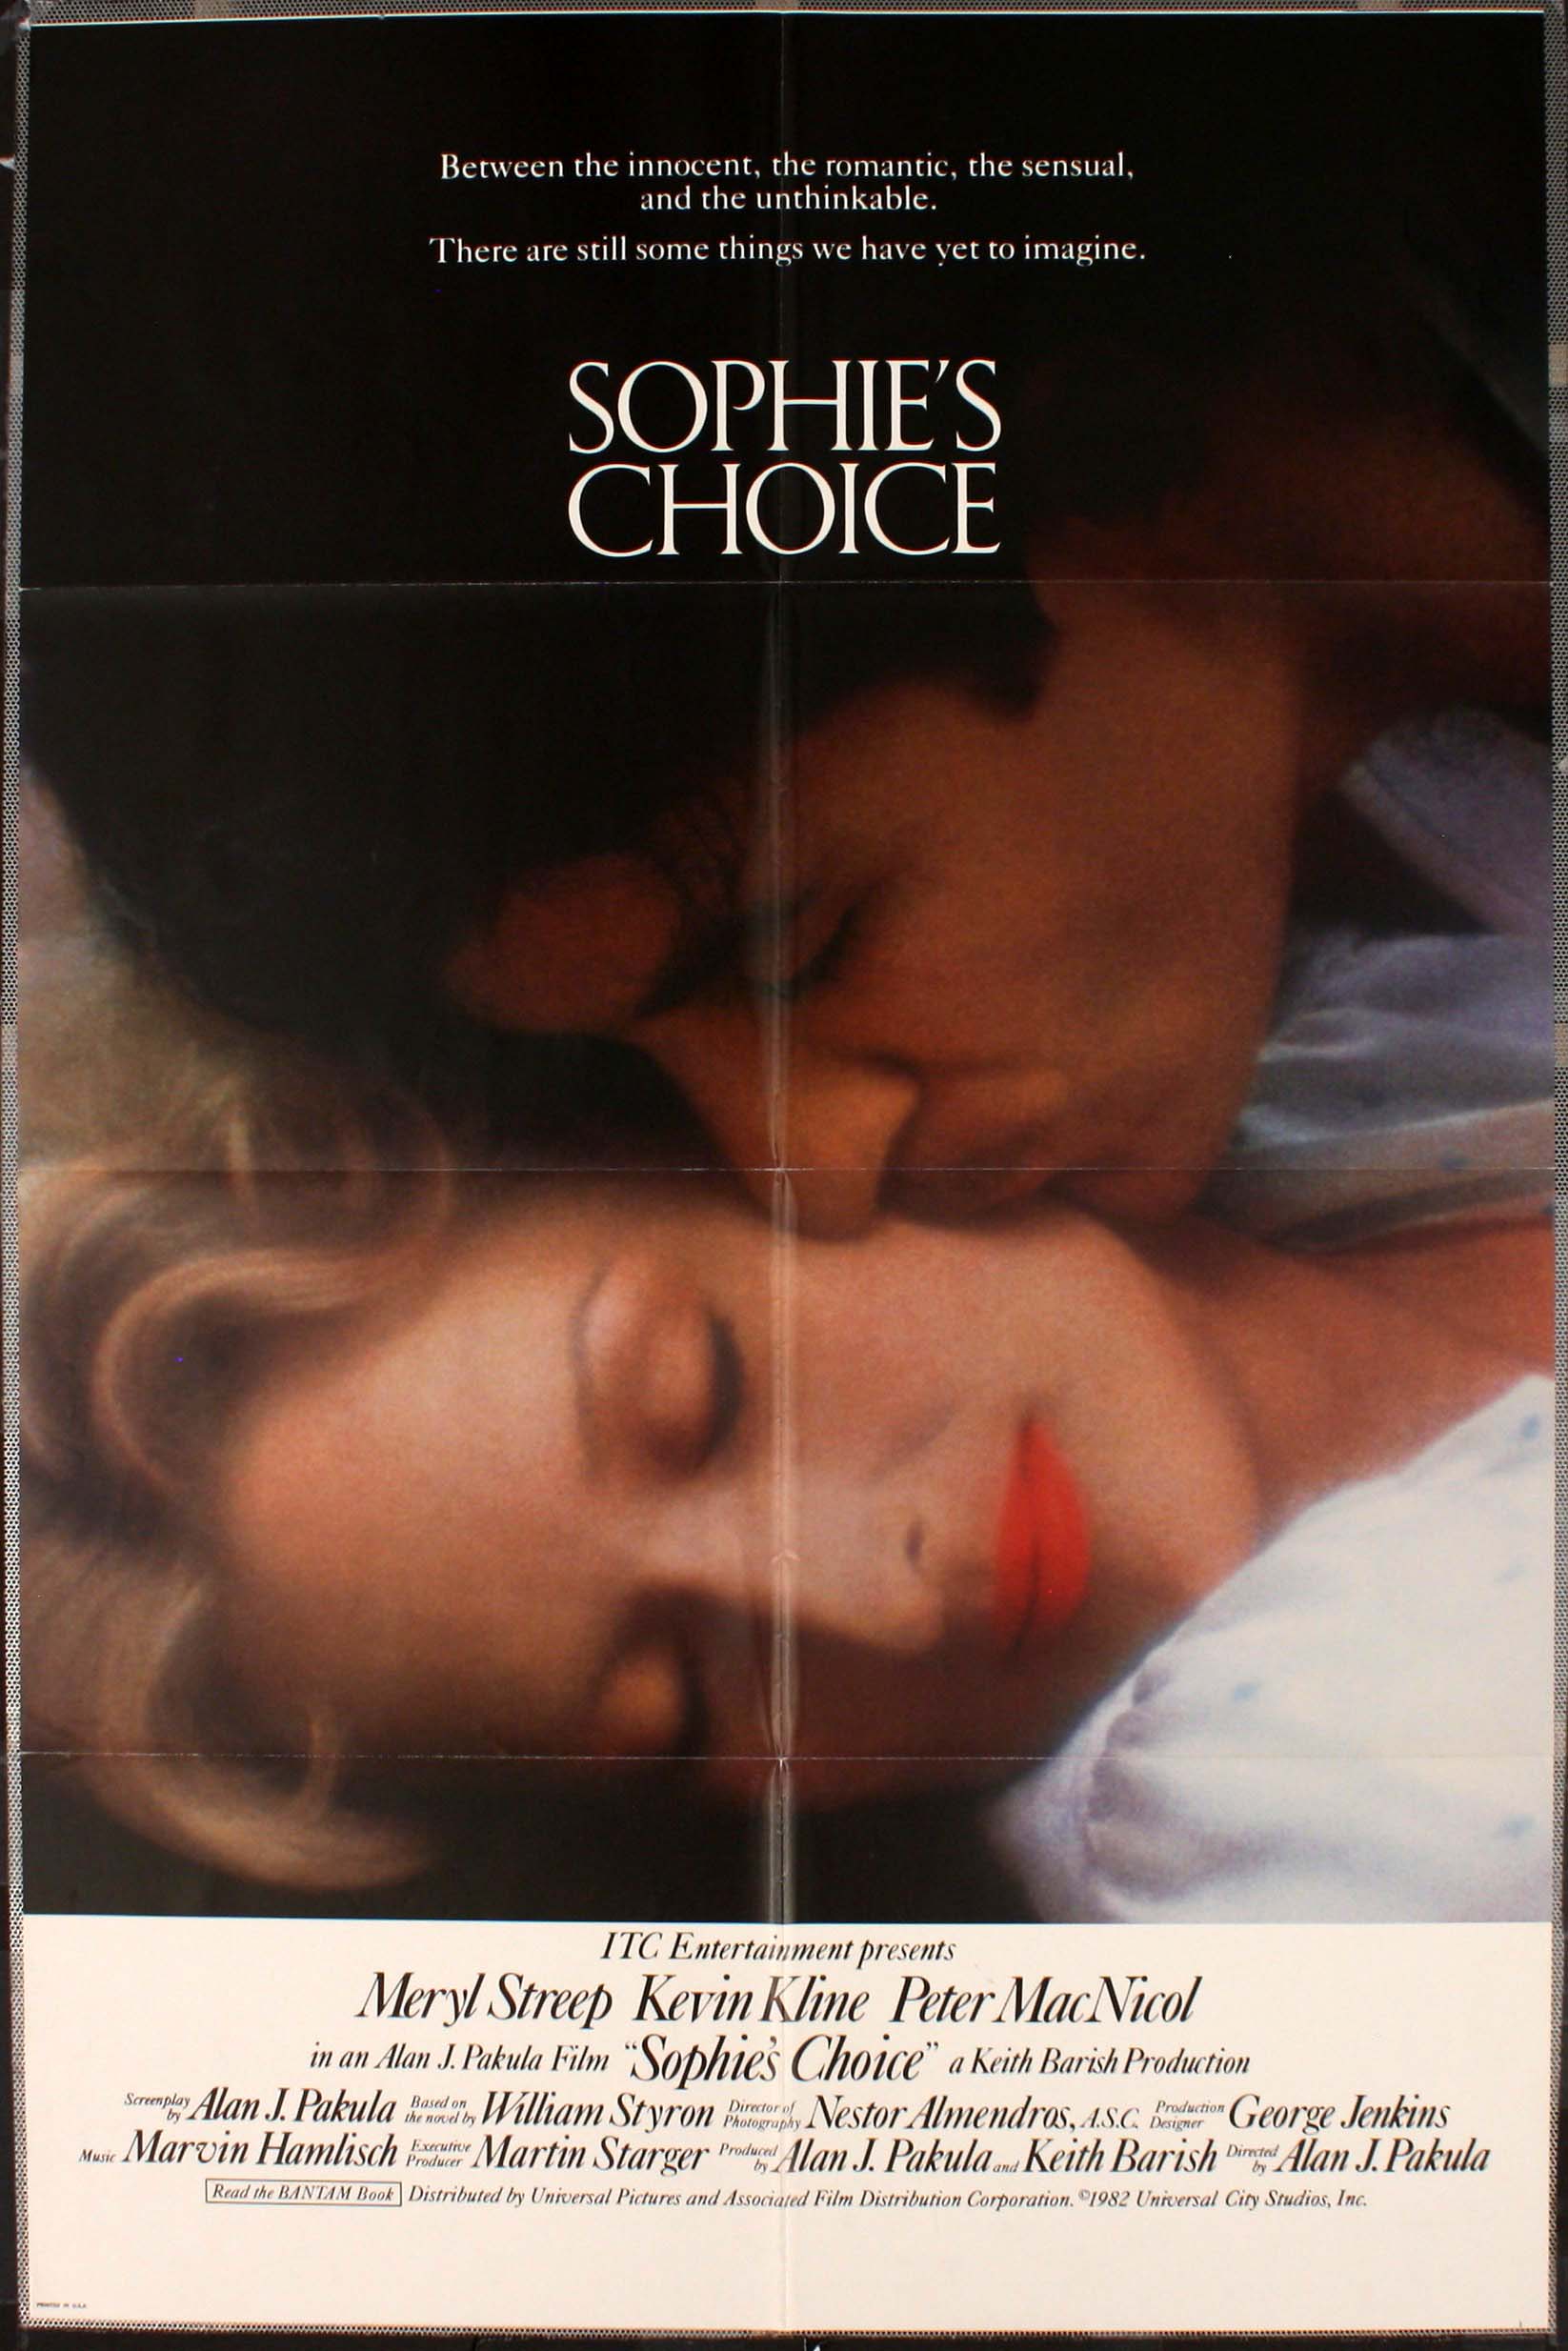 Steve Franfurt - 'Sophies Choice' Poster